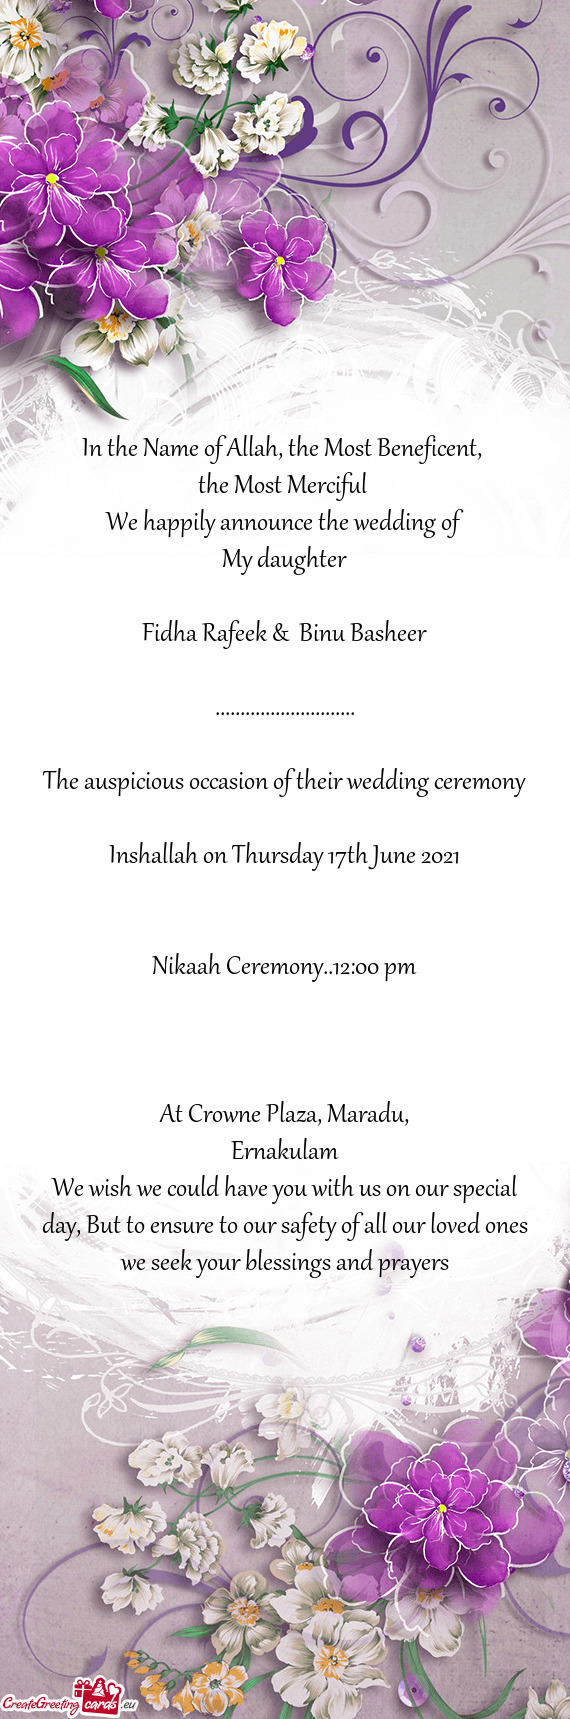 Nikaah Ceremony..12:00 pm